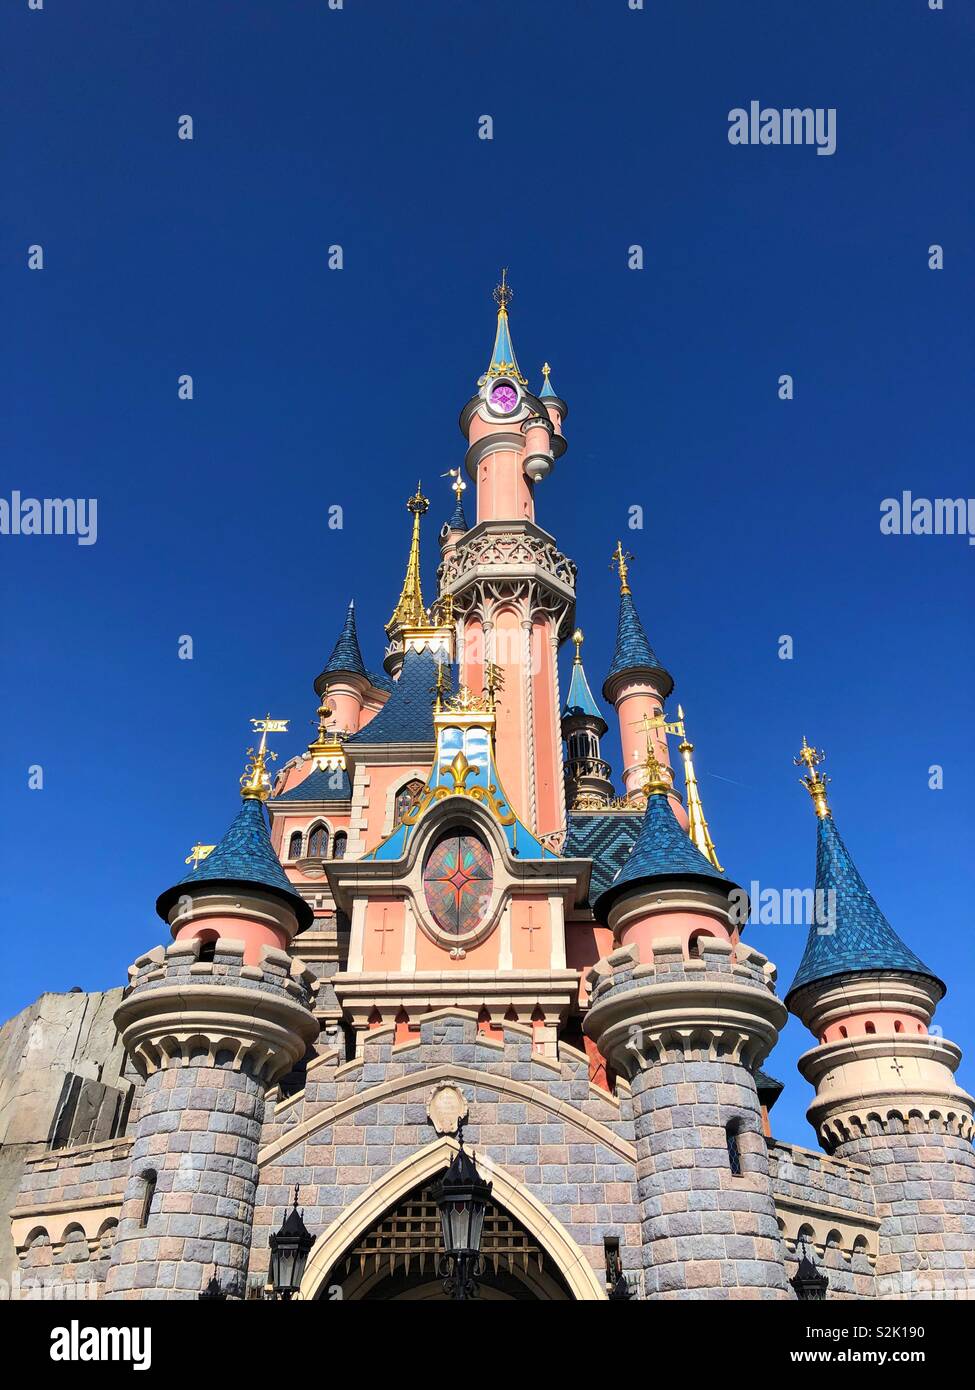 Disneyland Paris castle, the magical kingdom. Stock Photo